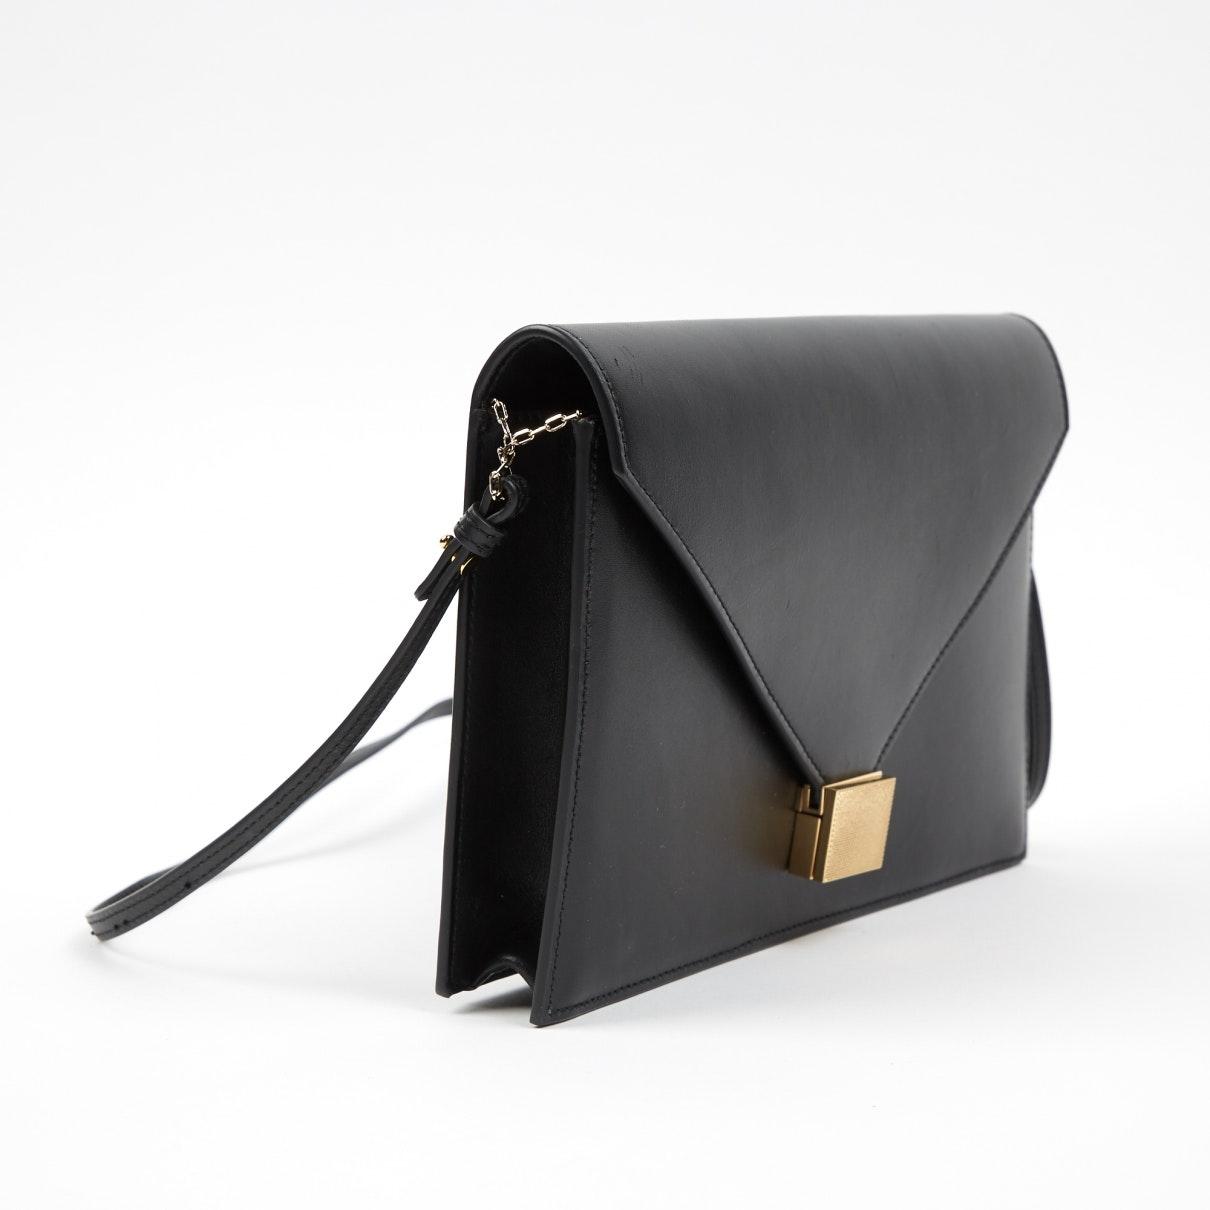 Victoria Beckham Black Leather Clutch Bag - Lyst